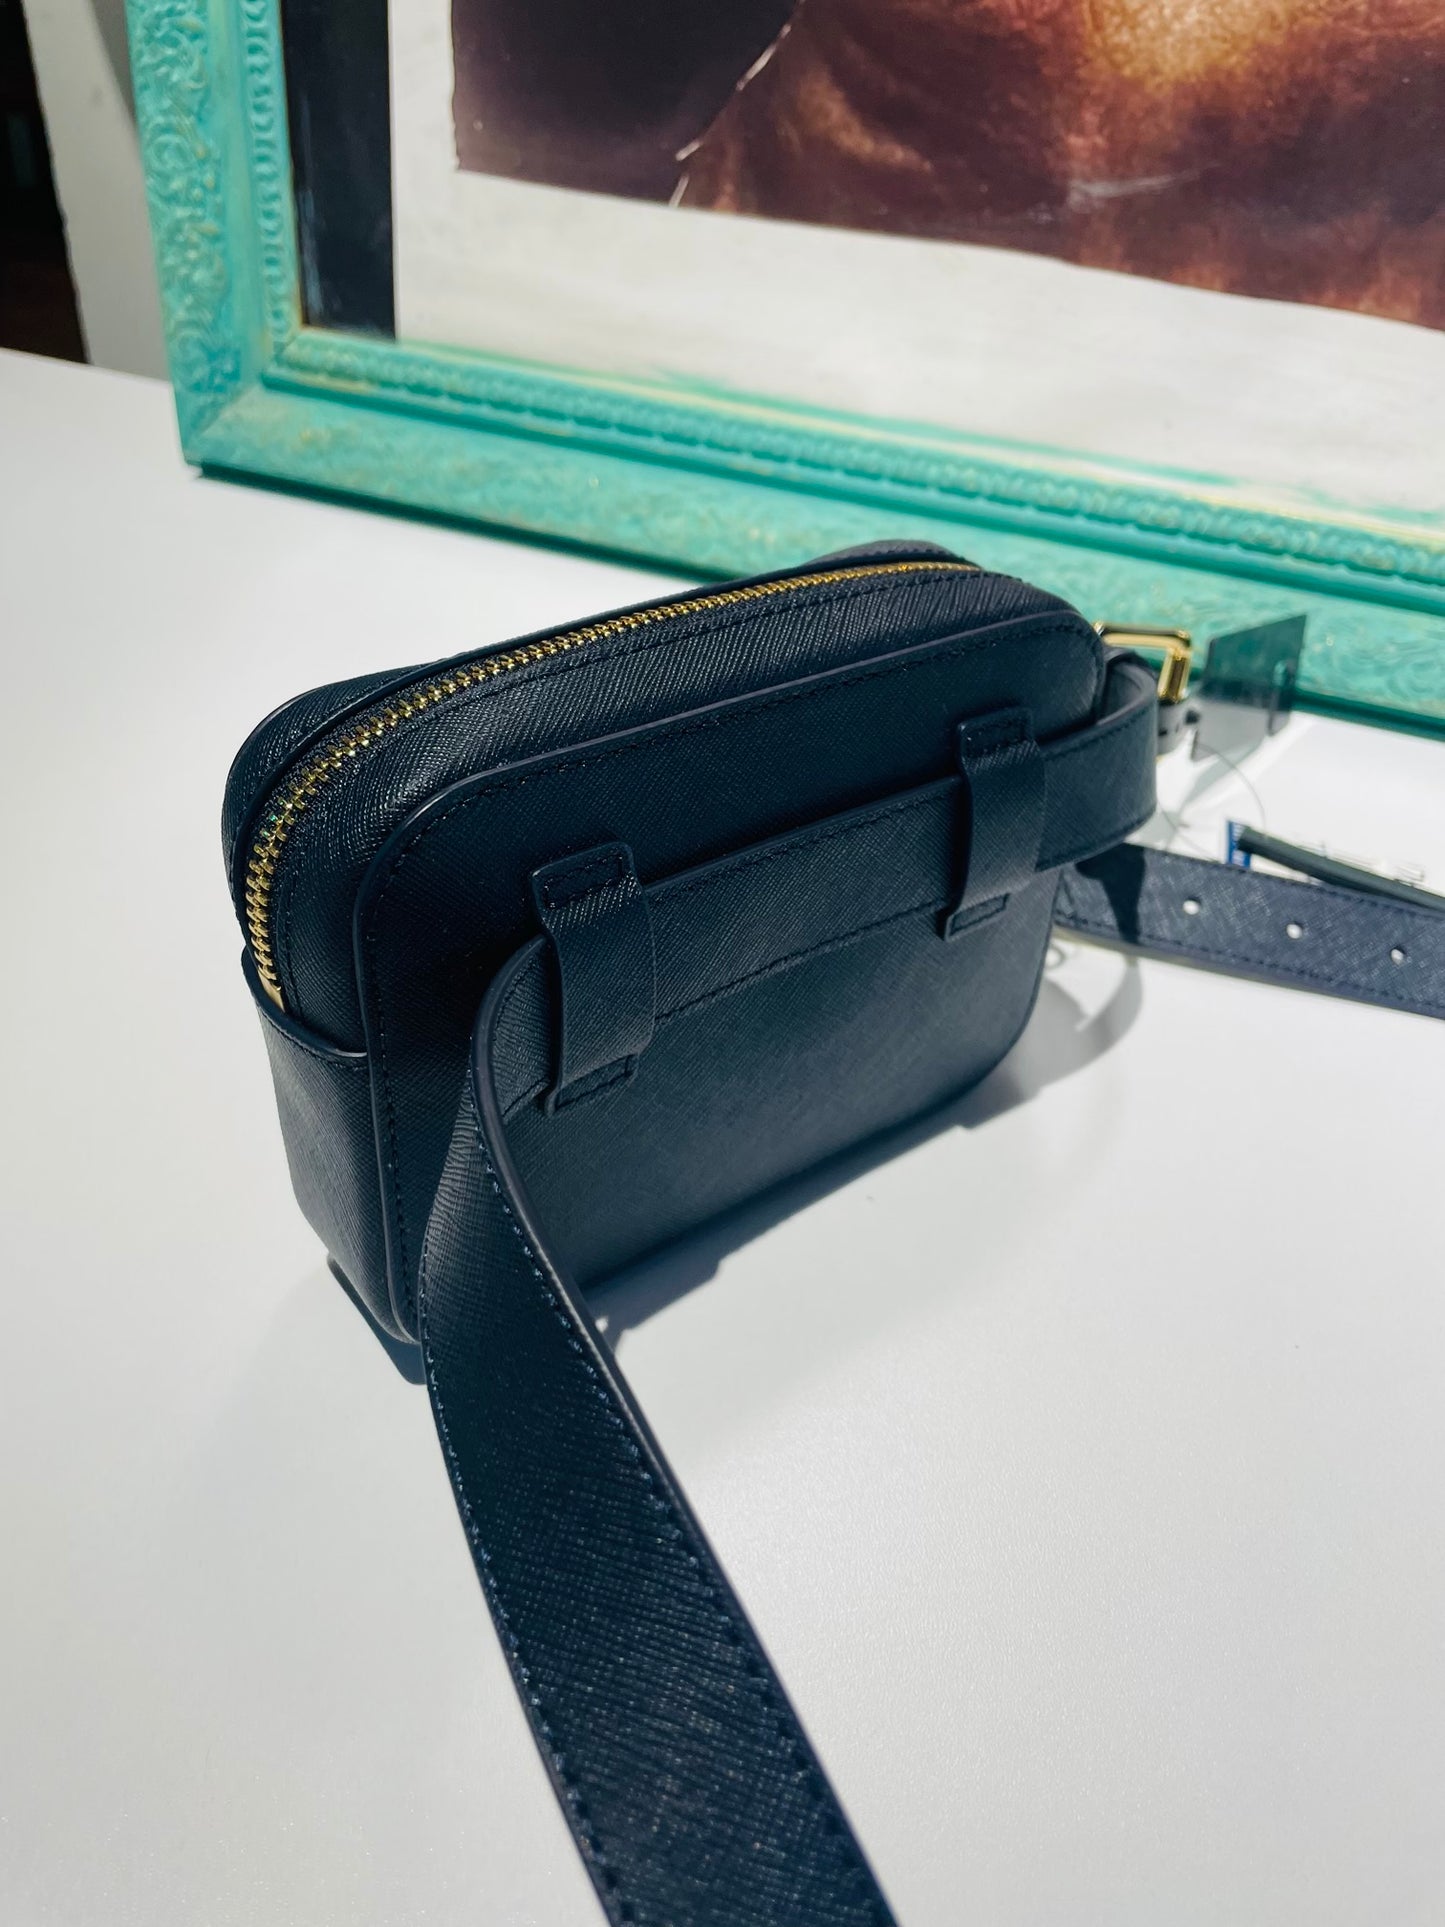 Ralph Lauren belt bag ( the belt can used alone)